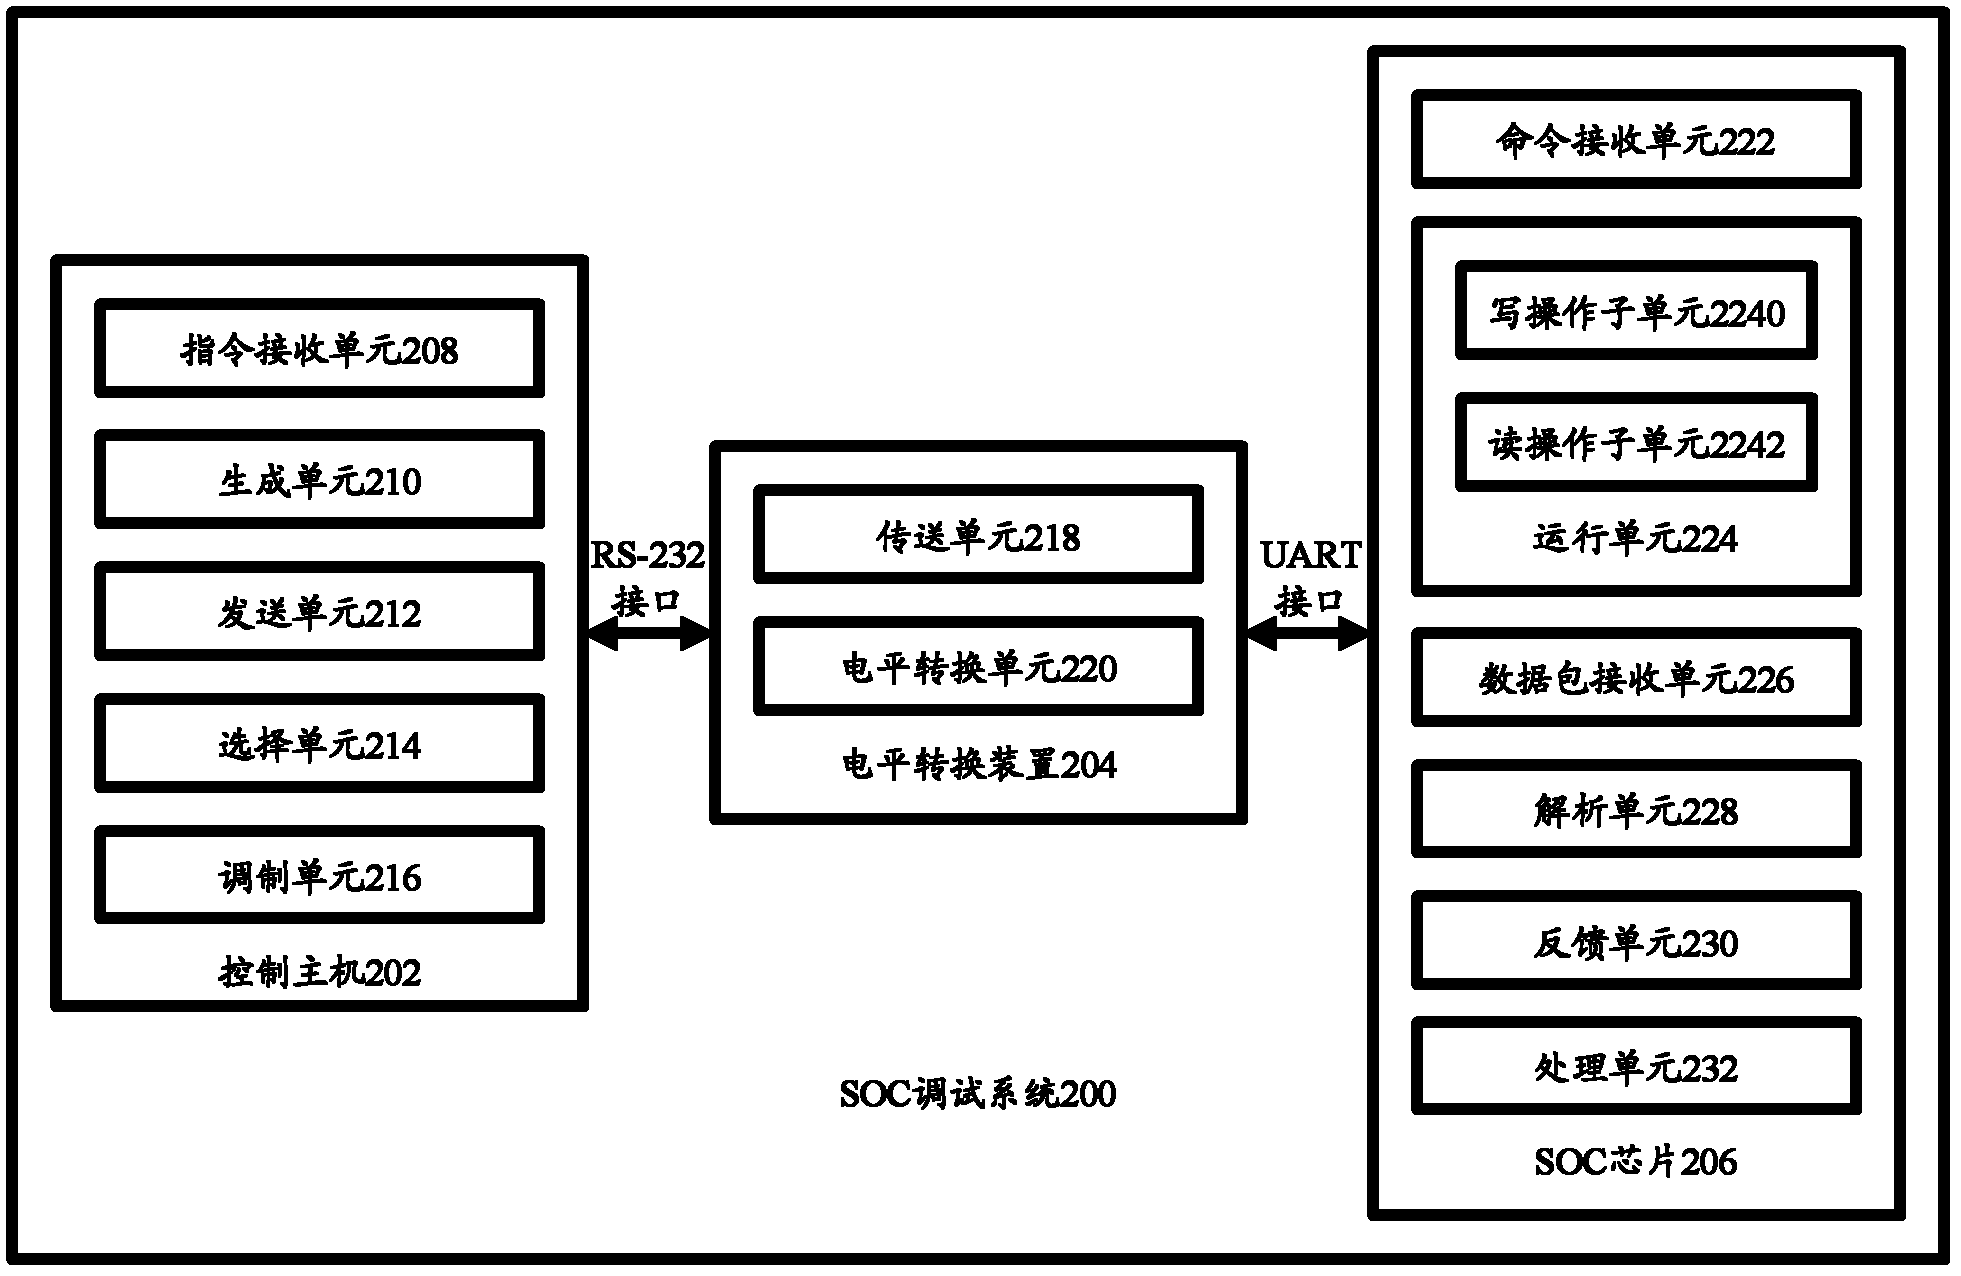 Debugging method and debugging system of SOC chip